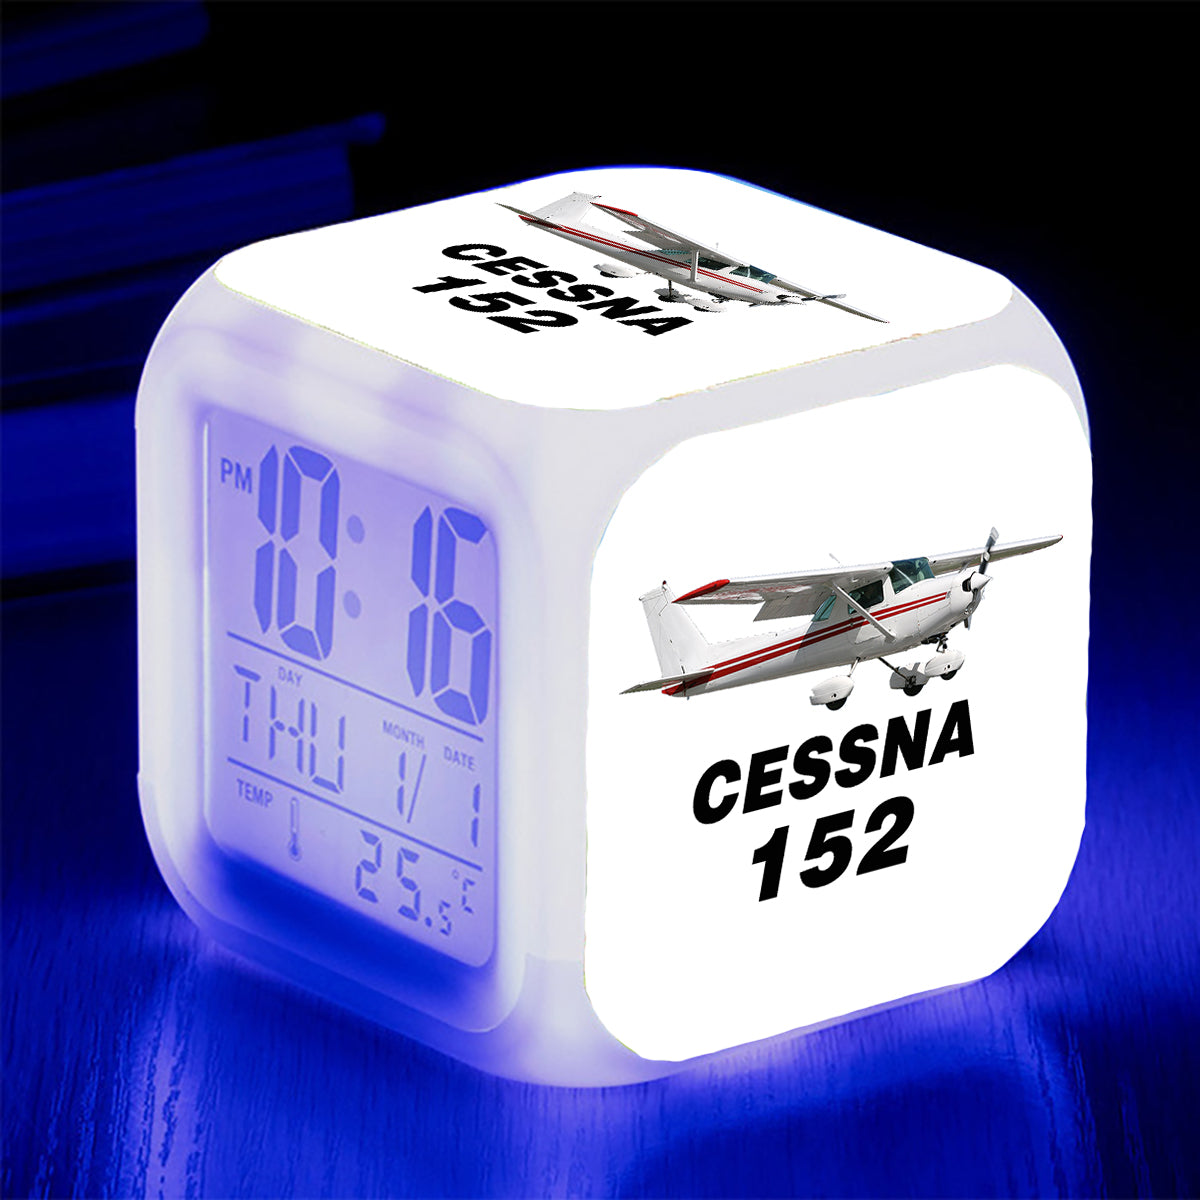 The Cessna 152 Designed "7 Colour" Digital Alarm Clock